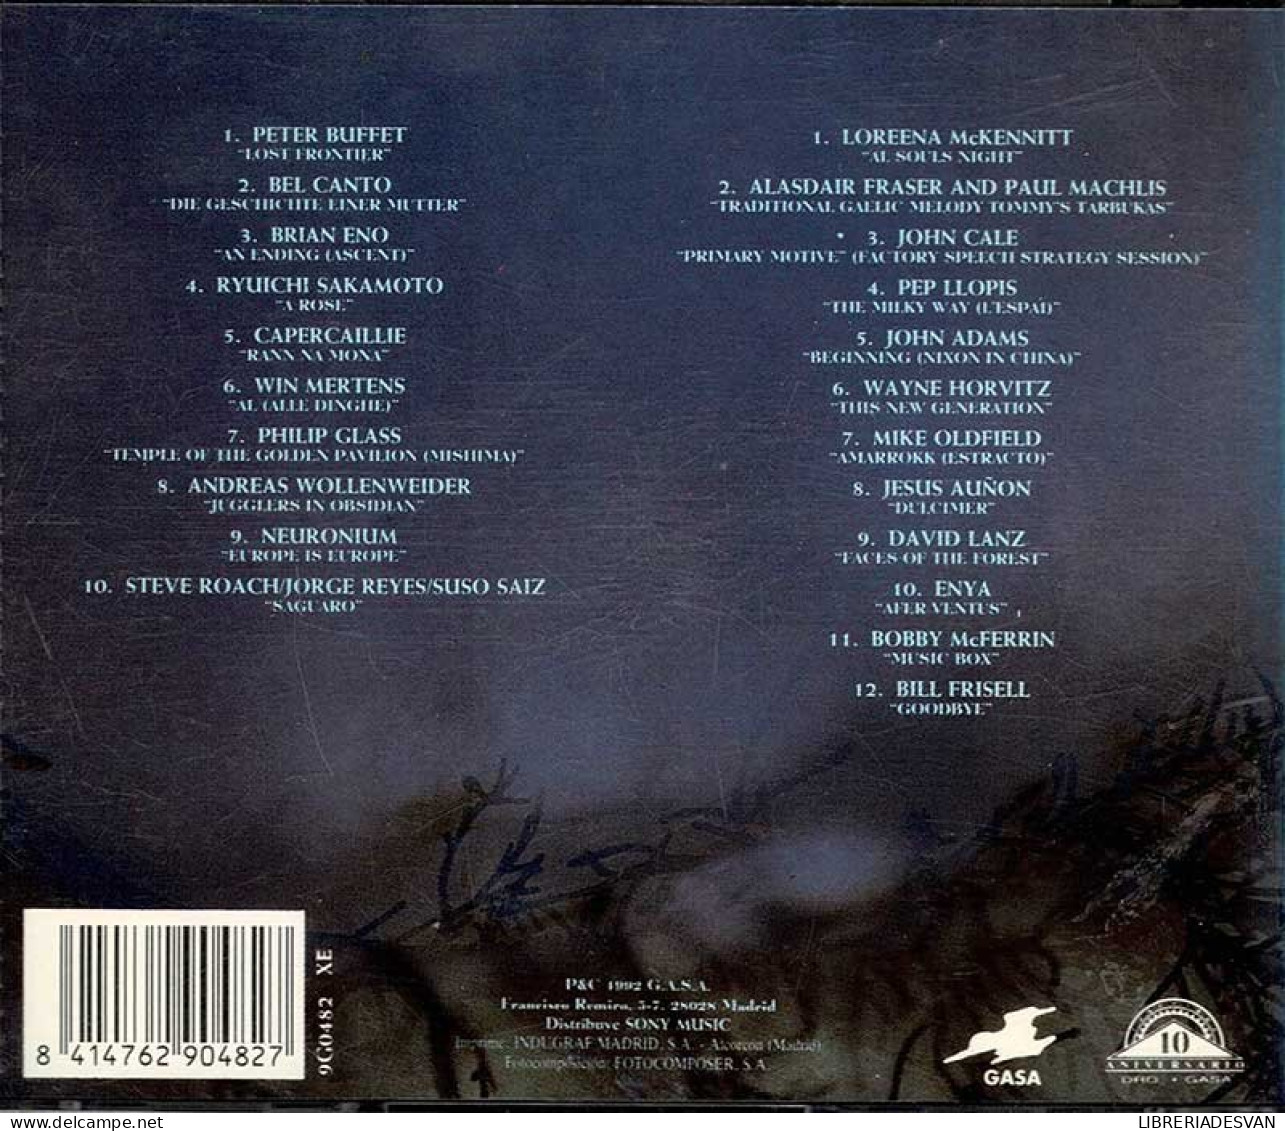 Música Sin Fronteras Vol. III. 2 X CD - New Age